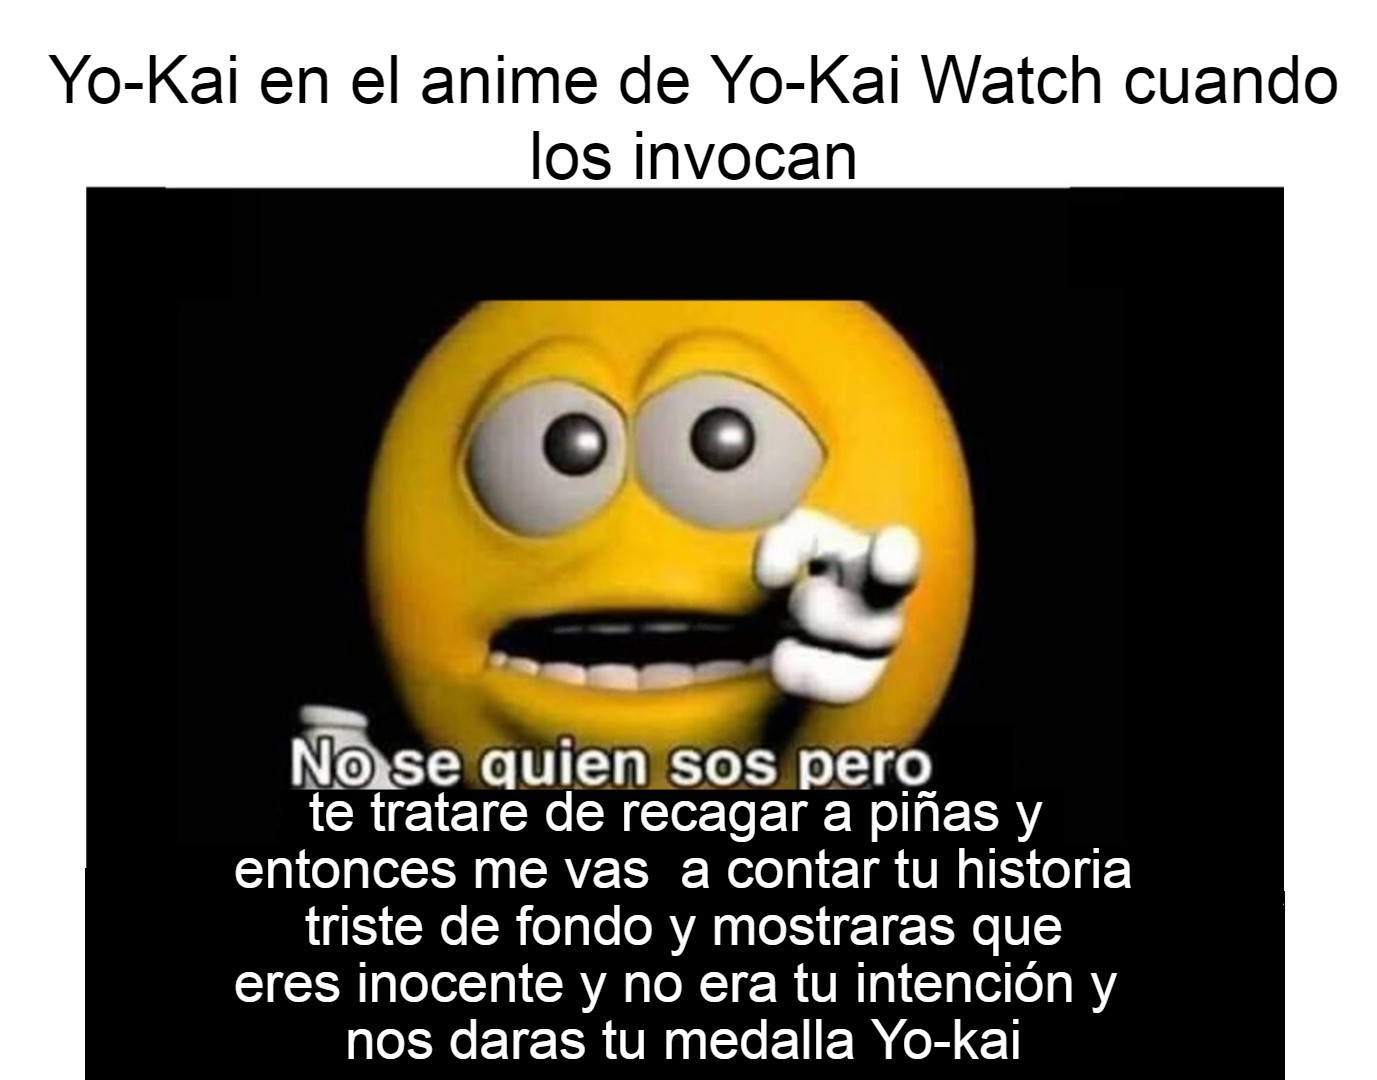 Trama anime de Yo-Kai Watch resumida (Es anime pero parece mas caricatura) - meme